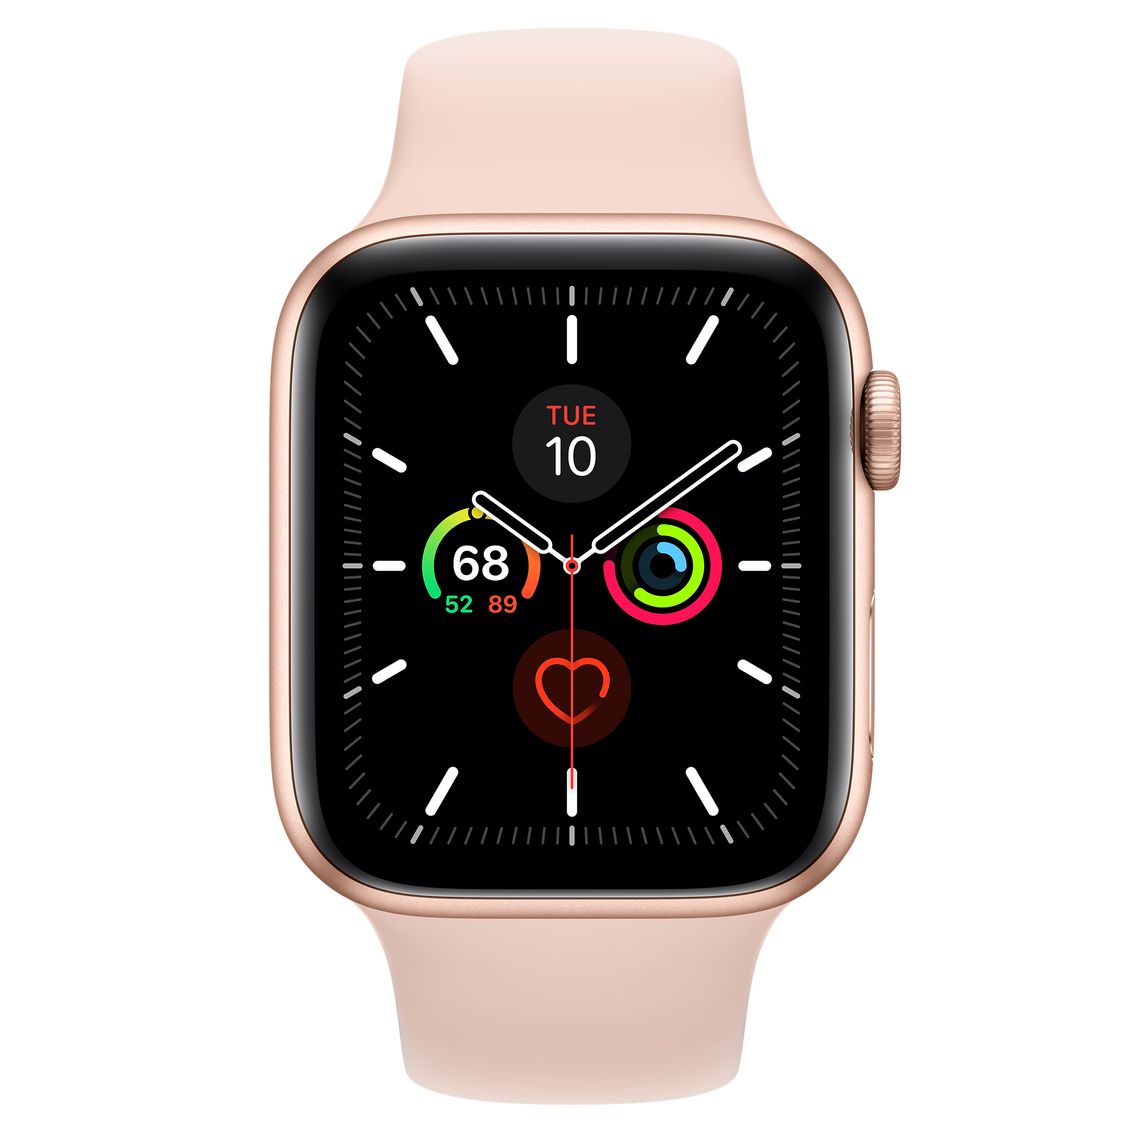 Apple Watch SERIES 3 GPS 38MM ROSE GOLD B